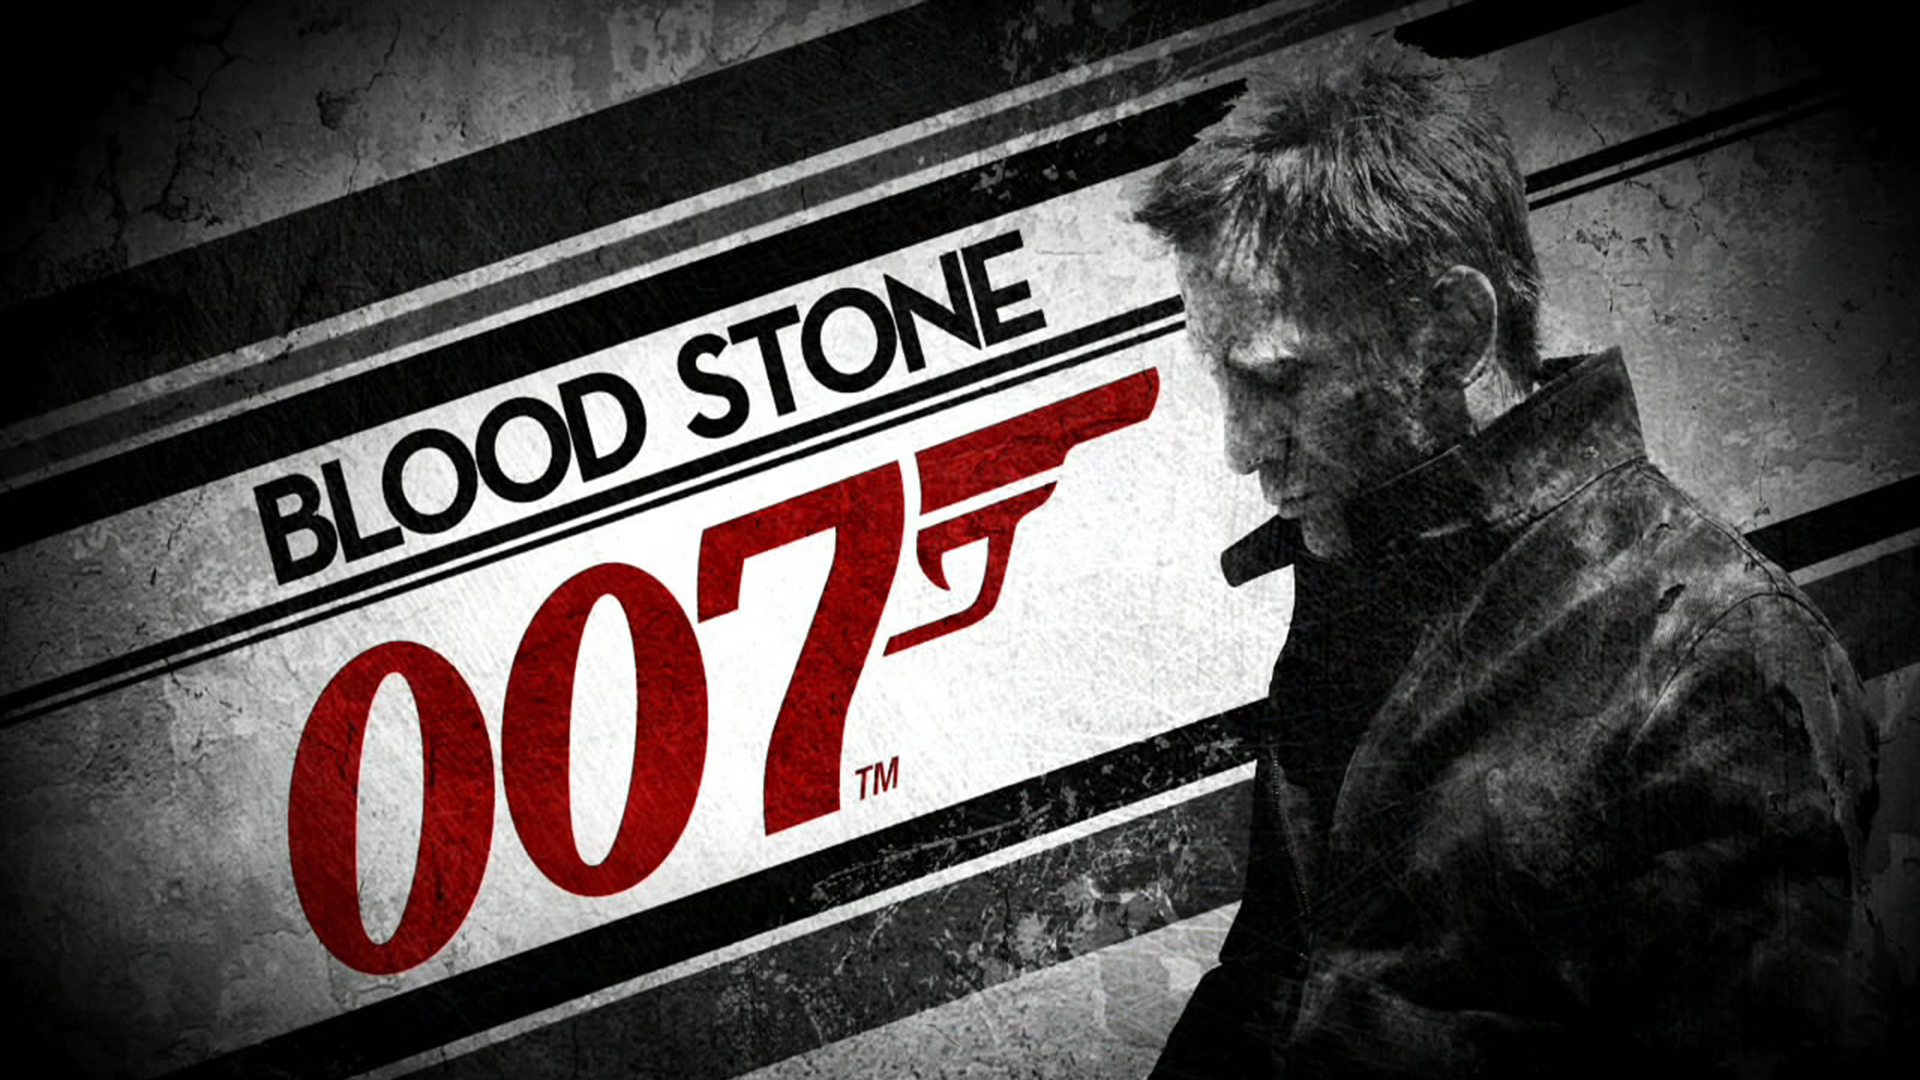 James bond 007 wallpapers